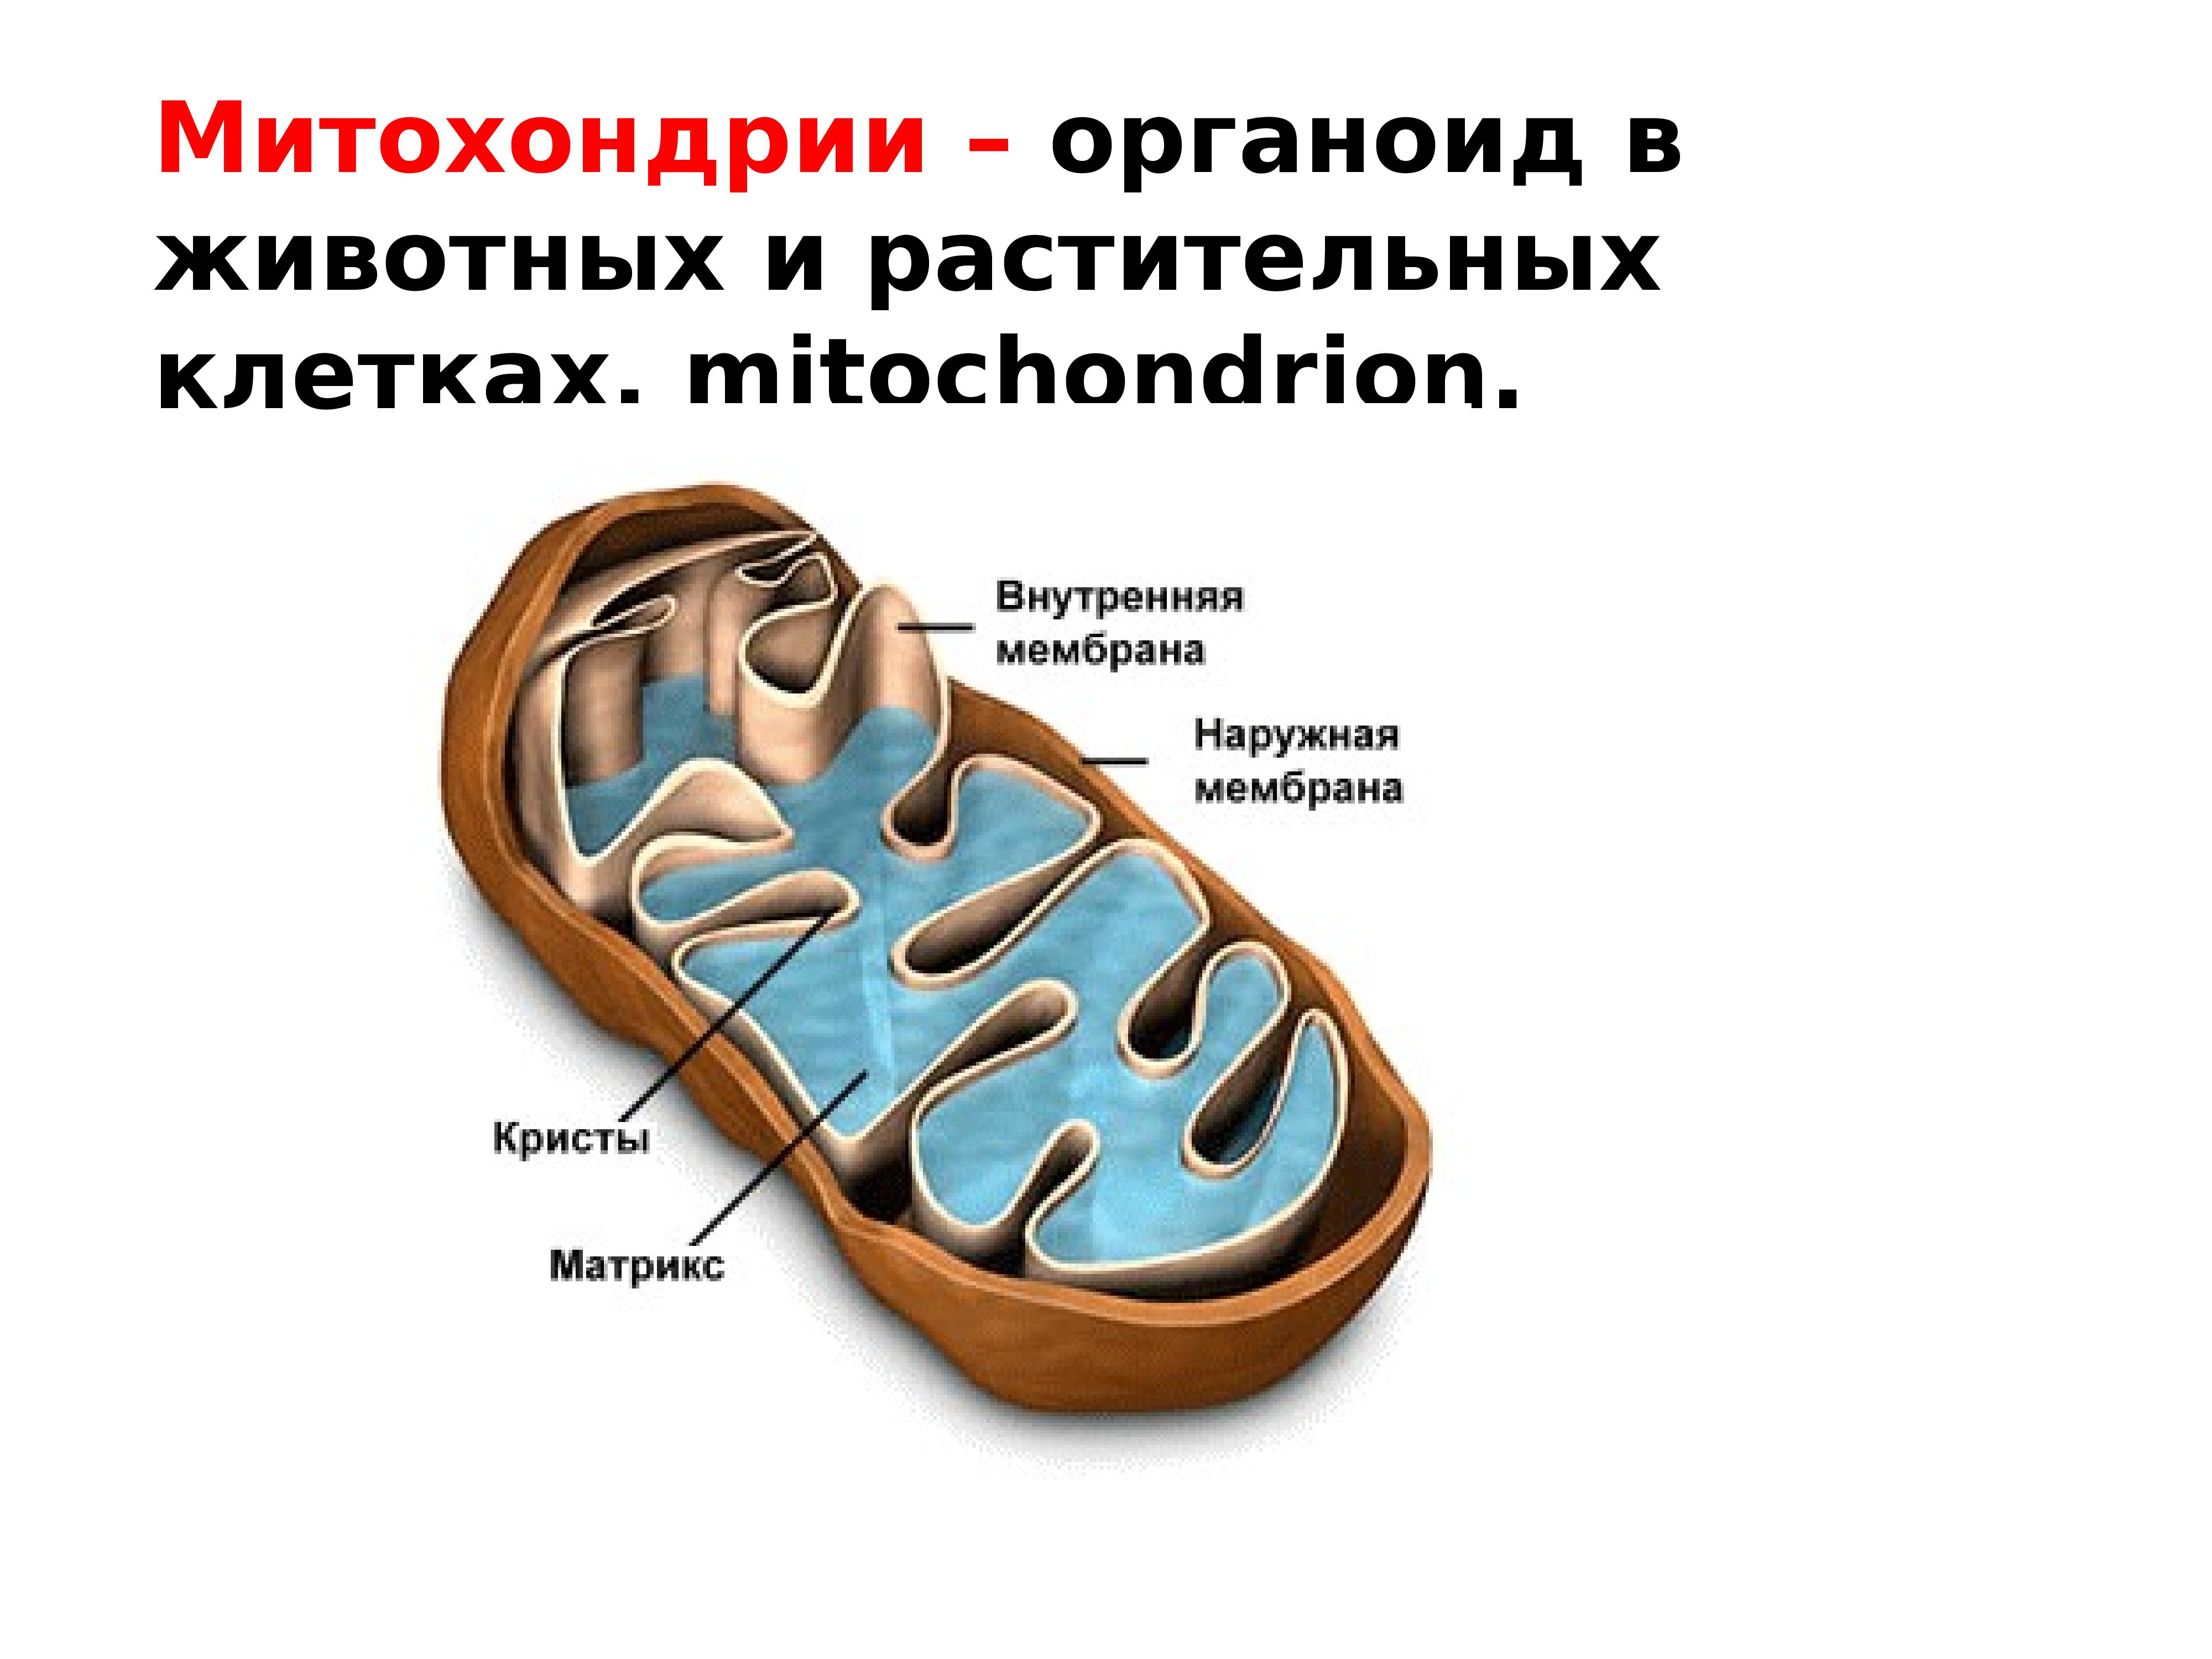 Признаки митохондрий и хлоропластов